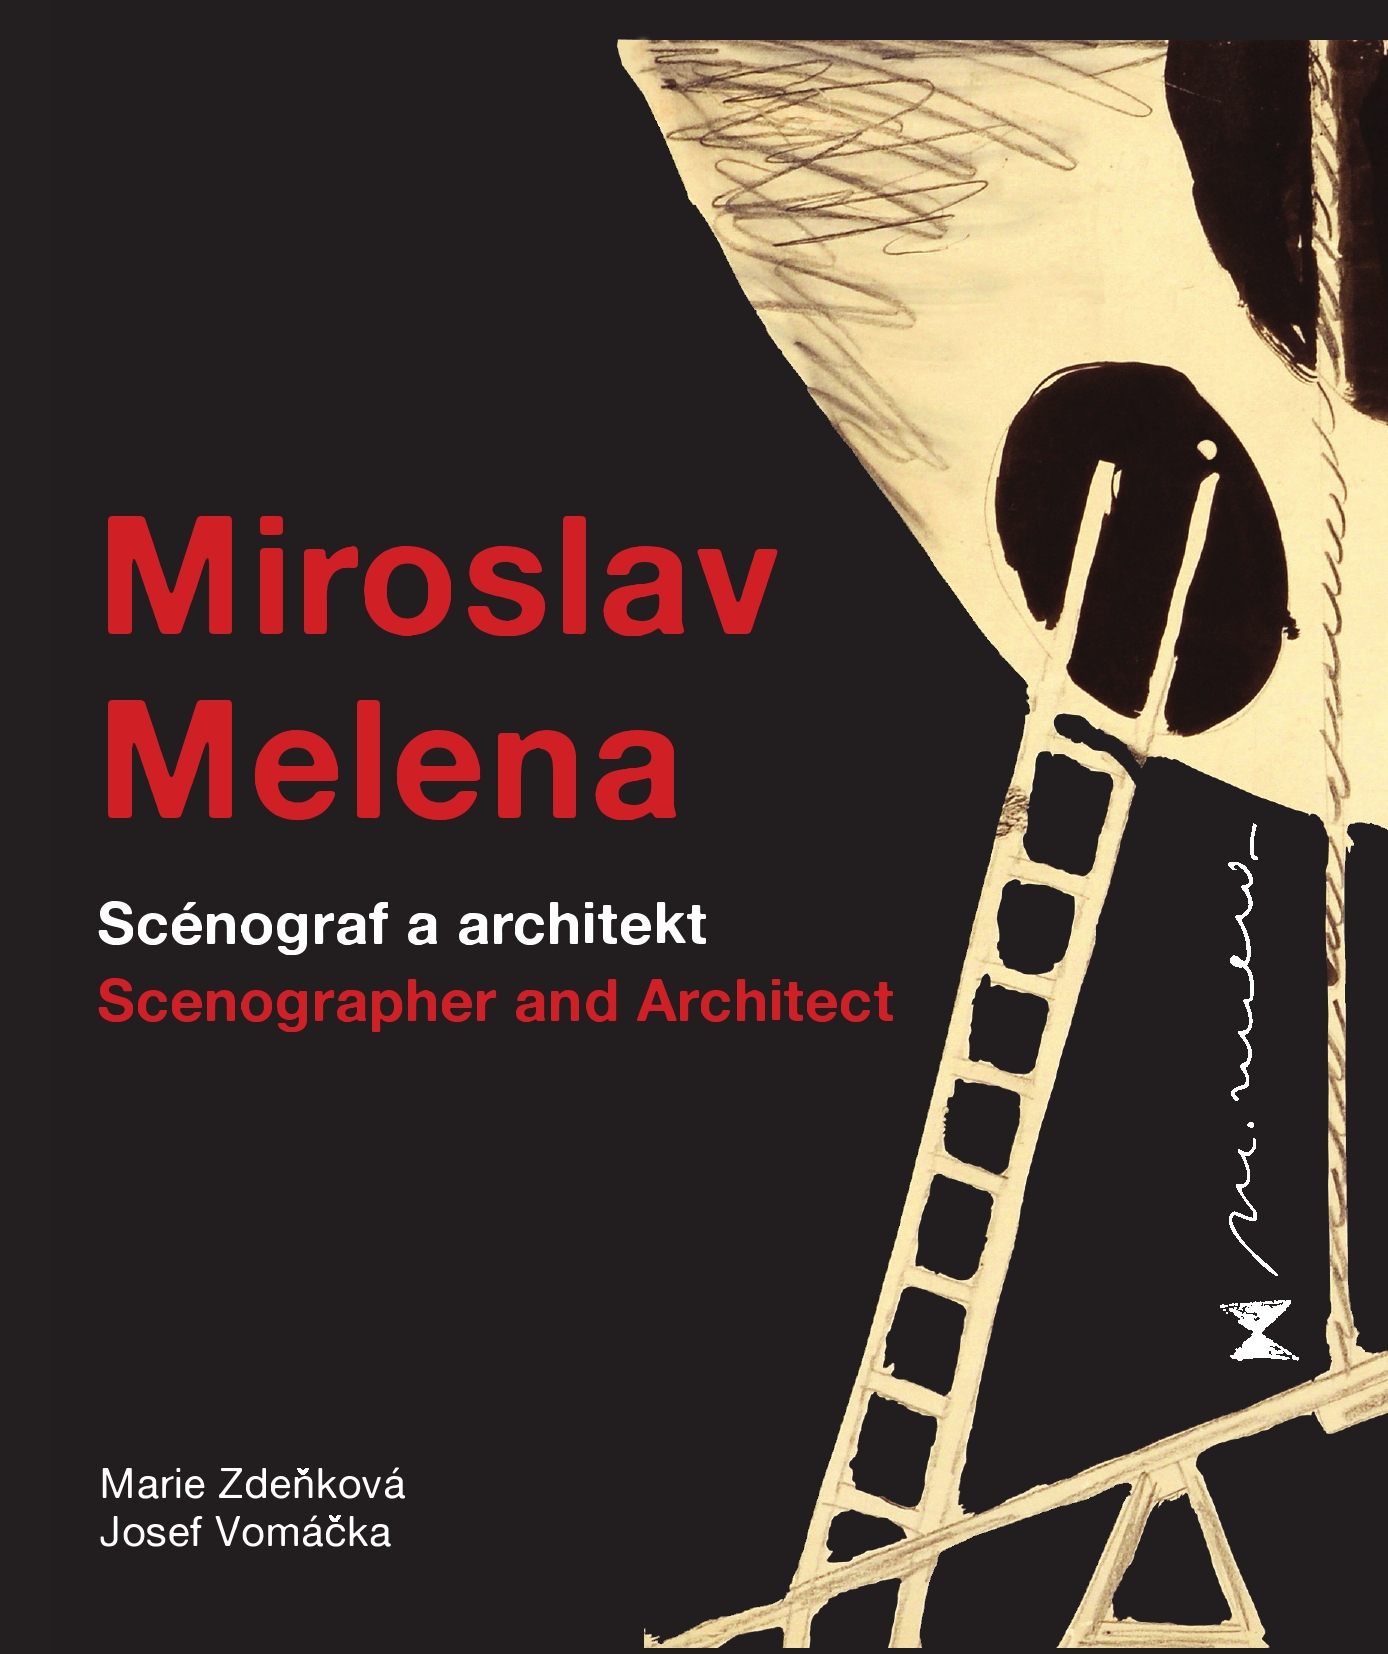 Miroslav Melena – Scenographer And Architect